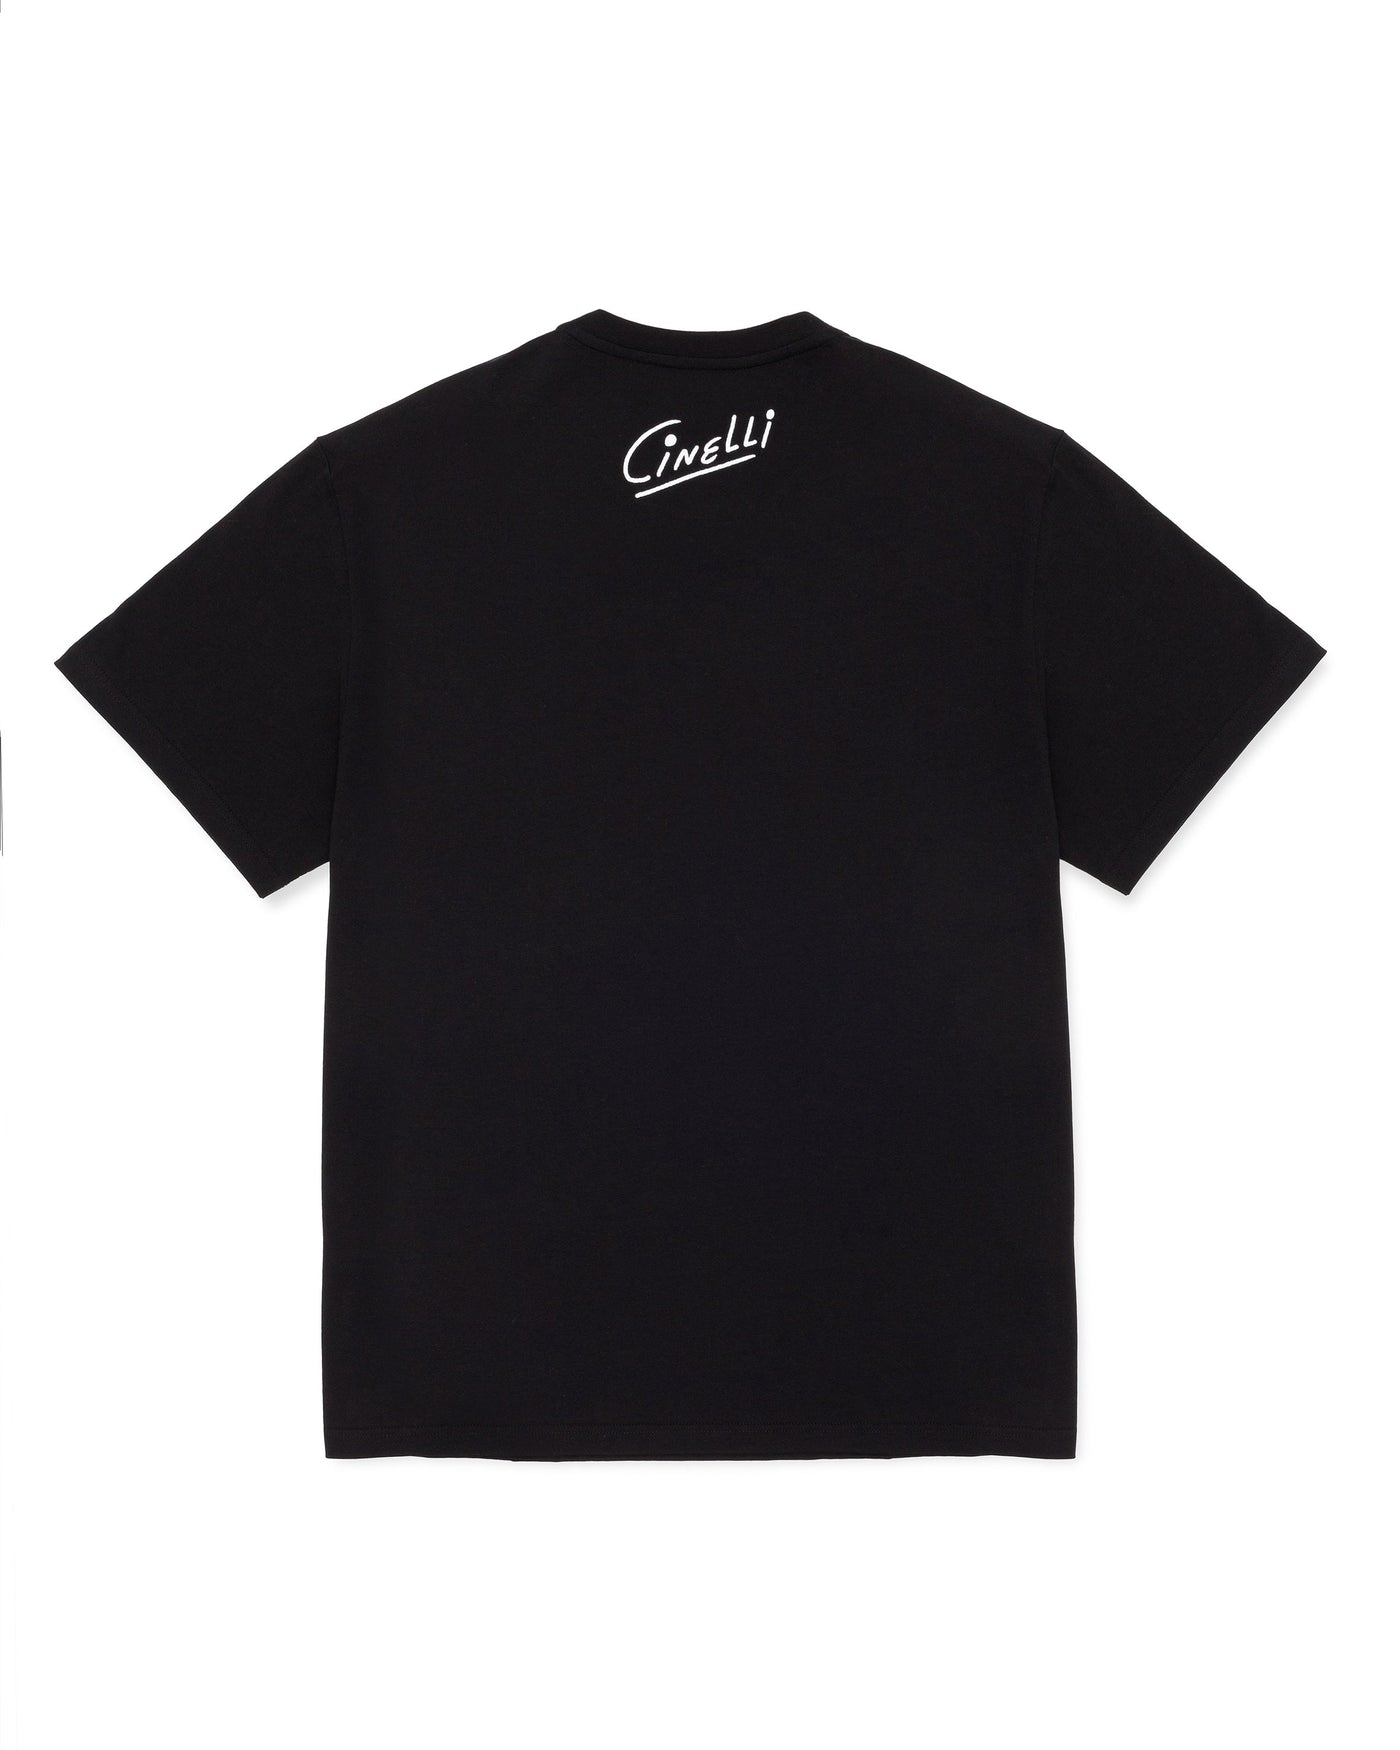 T-SHIRT SPECIALE CORSA BLACK BRAULIO, T-Shirt, IMG.3